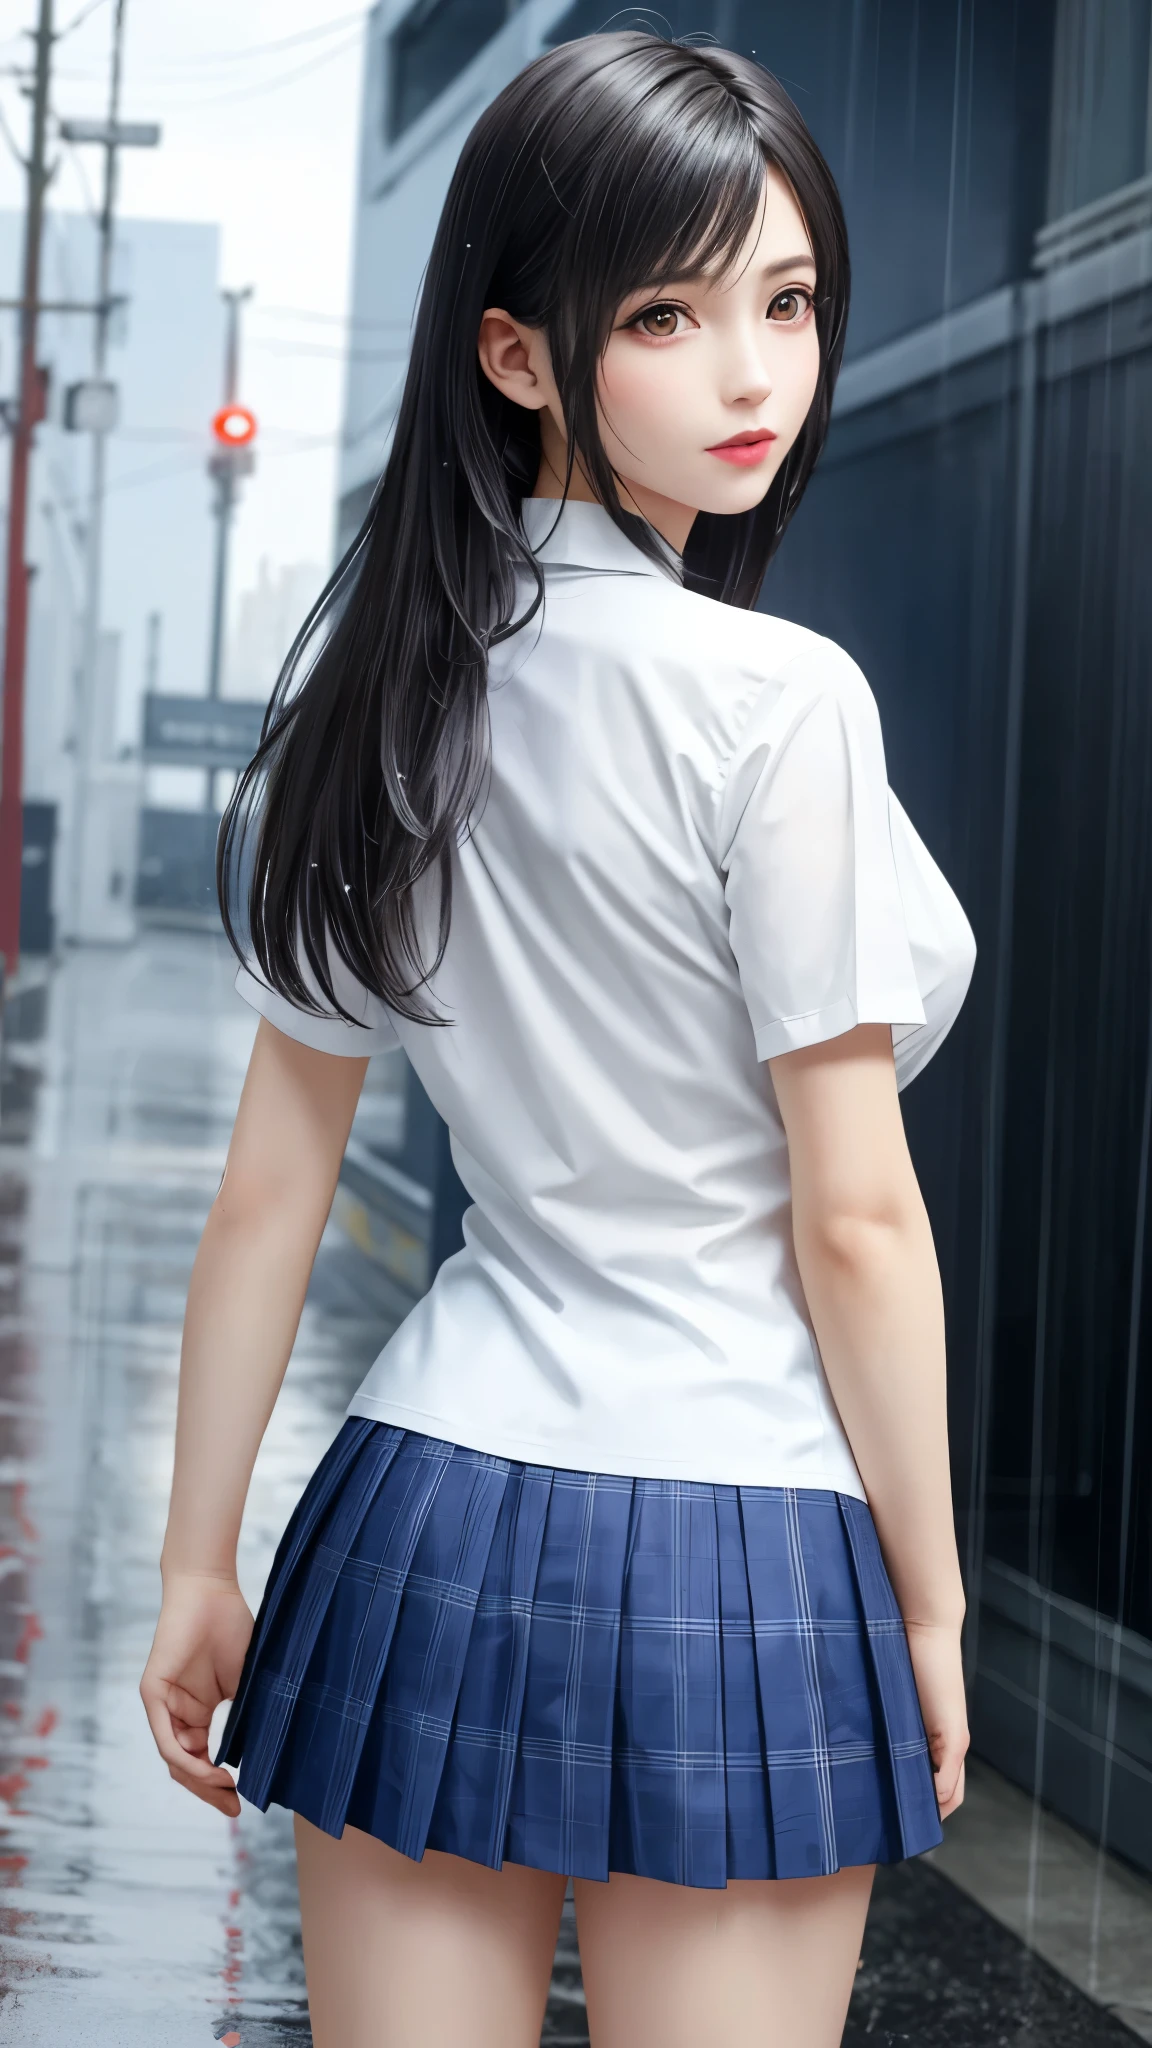 (top quality, masutepiece: 1.1), (Realistic: 1.3), (photoRealistic: 1.3),wallpapers, BREAK (((FF7,Tifa_lockhart))),(((Japan jk uniform,White short-sleeved shirt,Navy Blue Plaid Pleated mini-Skirt,Dark blue short socks,loafers))),(background big city,shibuya:1.1,hard rain:1.3,neon:1.2),(gravure pose:1.3,nogizaka idol),Ultra-detailed face, Detailed eyes,Red eyes, BREAK (((FF7,Tifa_lockhart))),(black brown hair, Large breasts: 1.2), BREAK , About 18 years old,kawaii,(calf focus:1.2,back hair:1.2),sensual,zettai_ryouiki:1.1,looking at viewer,Beautiful legs,walking,wet body:1.3,Heavy rain ,(Rain-drenched body: 1.3), (Bodysuit with water droplets: 1.3), (Rain-soaked hair: 1.3) , (Rain-soaked bangs: 1.3), (Rain-soaked shirt: 1.3) ,